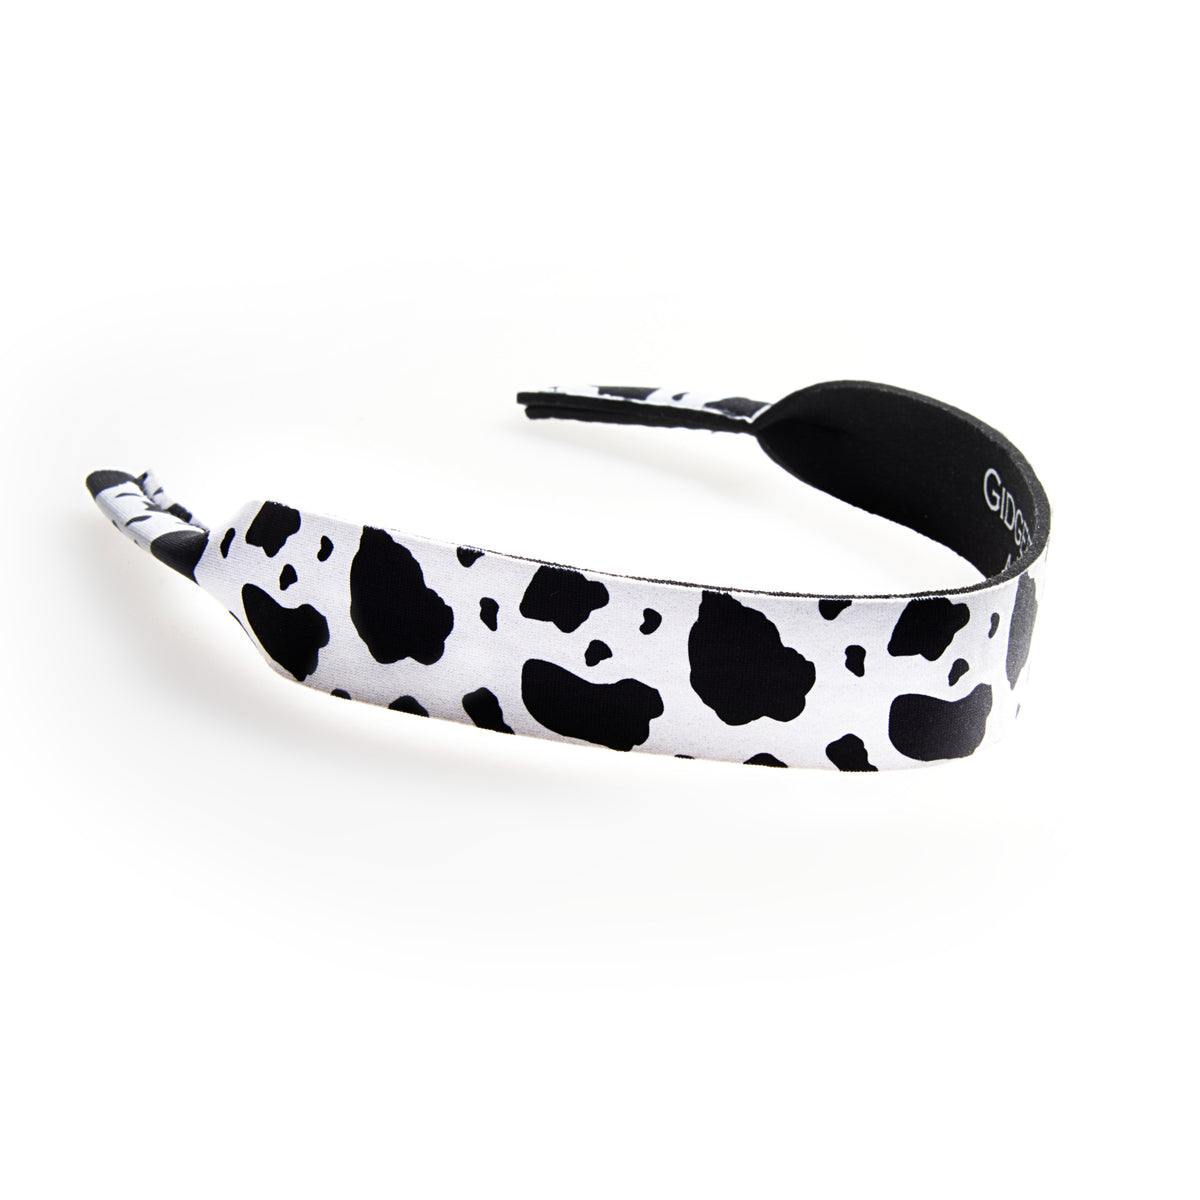 Gidgee Eyes - Sunglass Strap - Cow Black and White